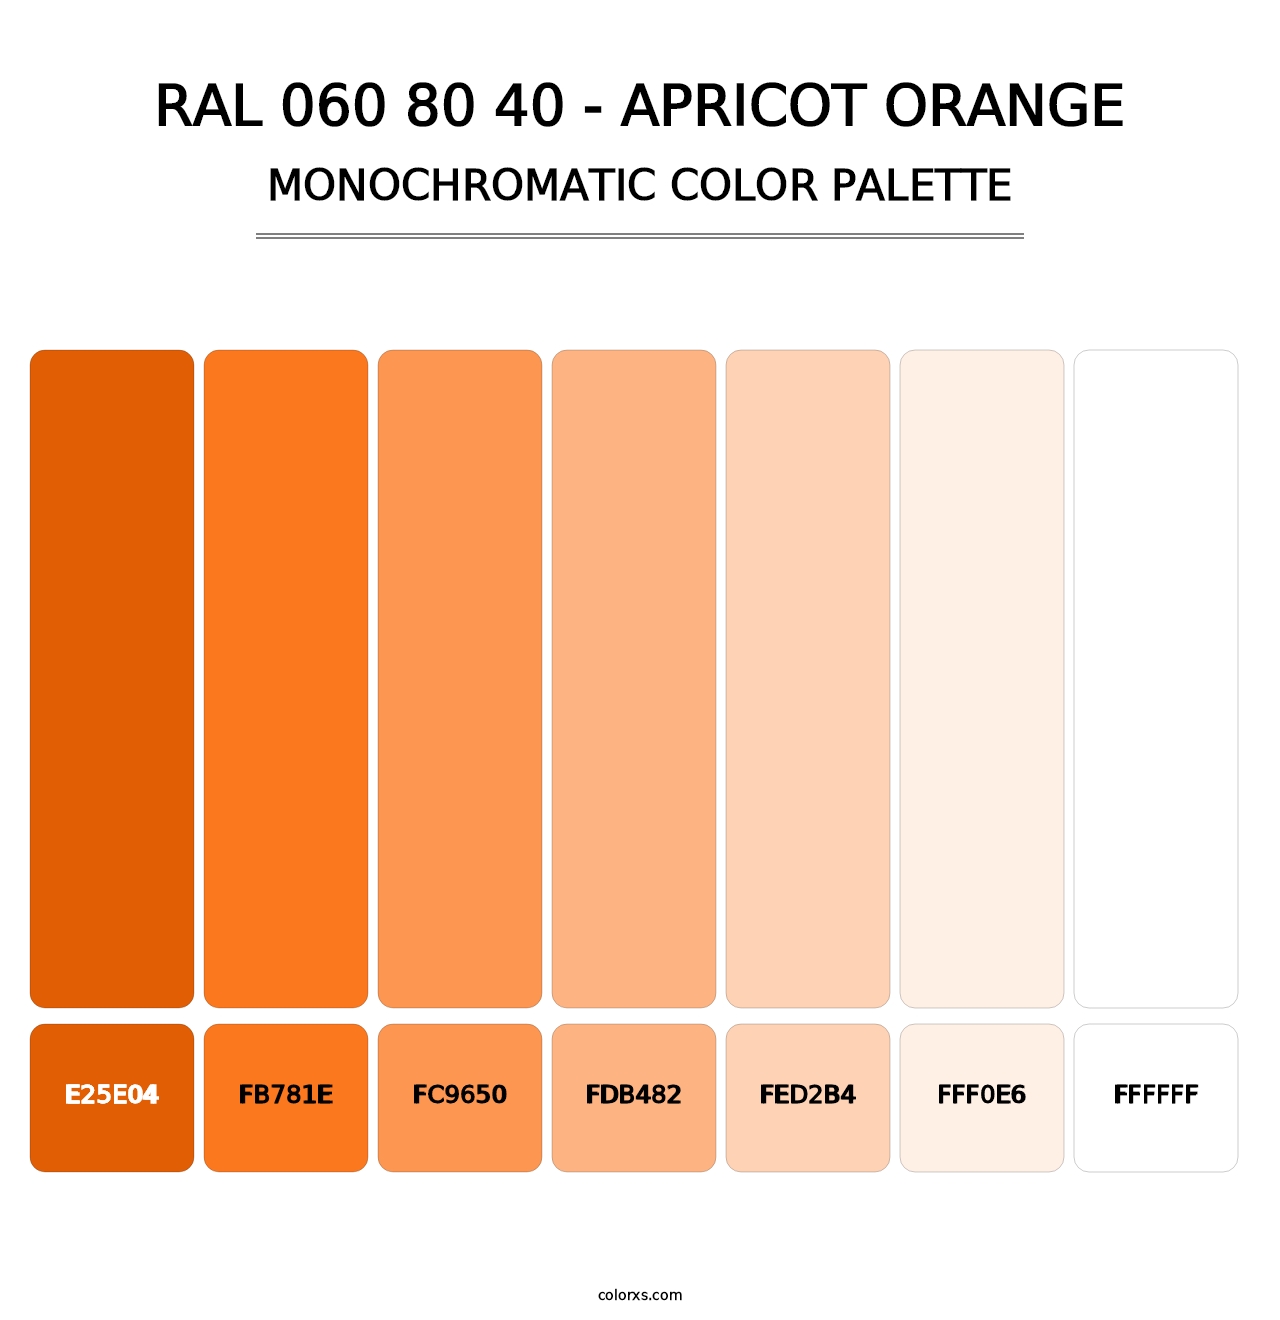 RAL 060 80 40 - Apricot Orange - Monochromatic Color Palette